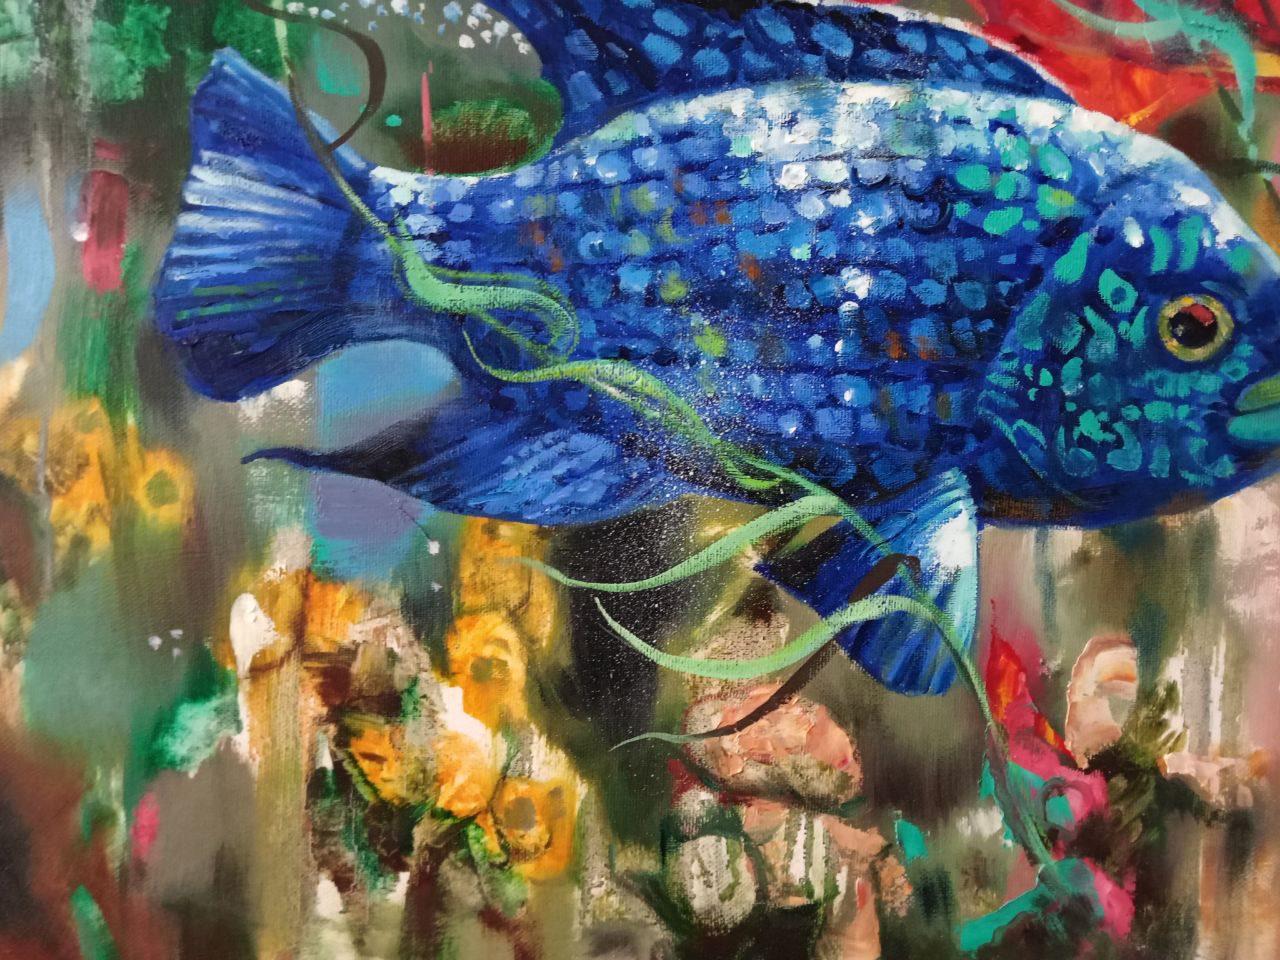 Artist: Anatoly Borisovich Tarabanov
Work: Original oil painting, handmade artwork, one of a kind 
Medium: Oil on Canvas 
Year: 2010
Style: Contemporary Art
Title: Fish
Size: 27.5